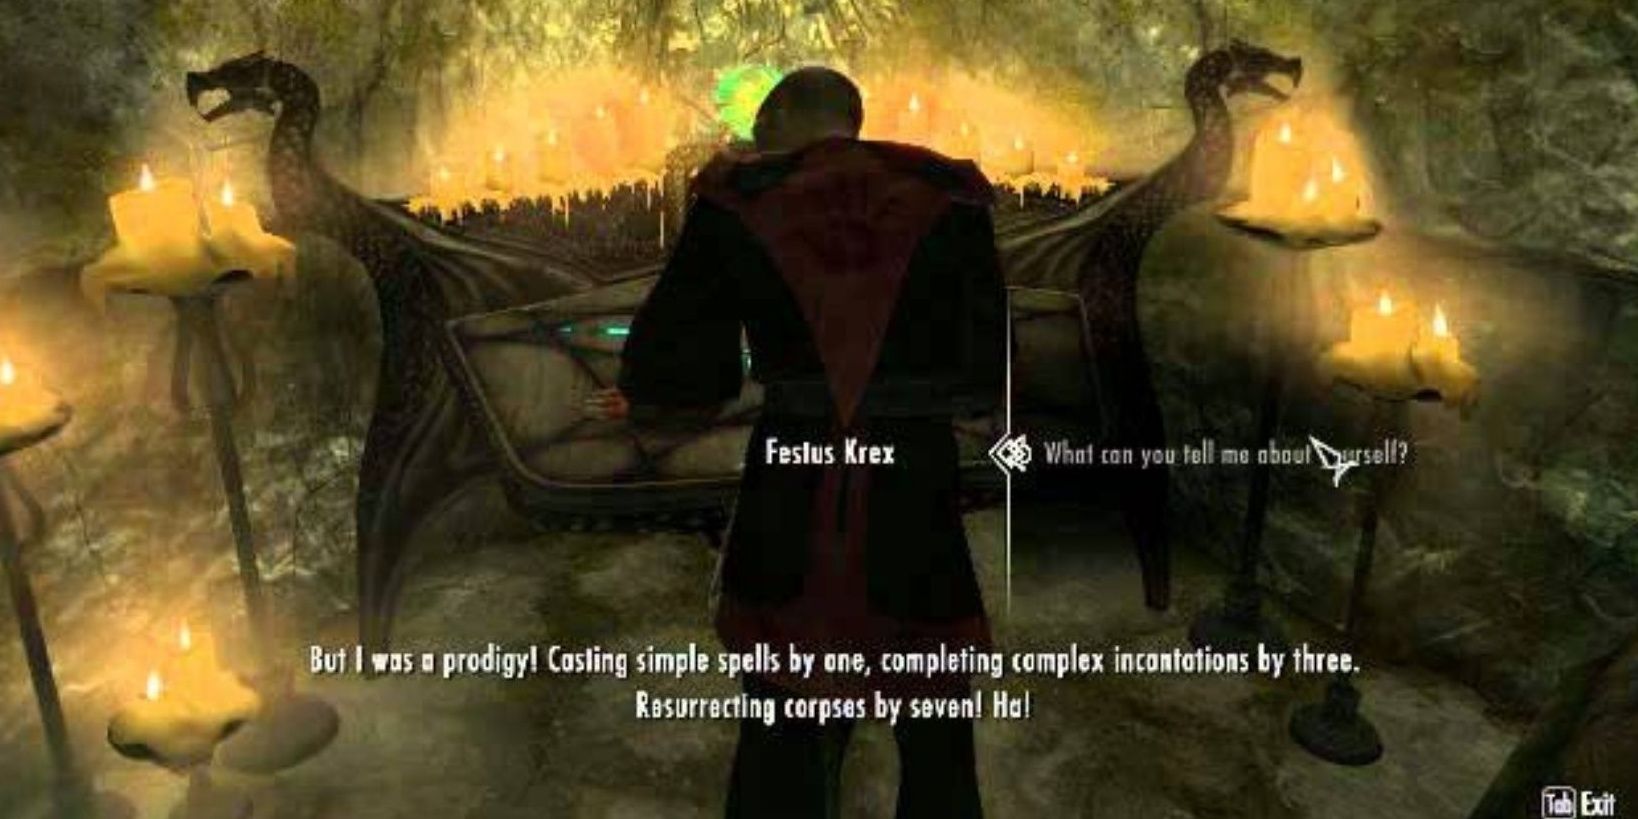 Skyrim Assassin Festus Krex doing Enchanting while speaking to a player